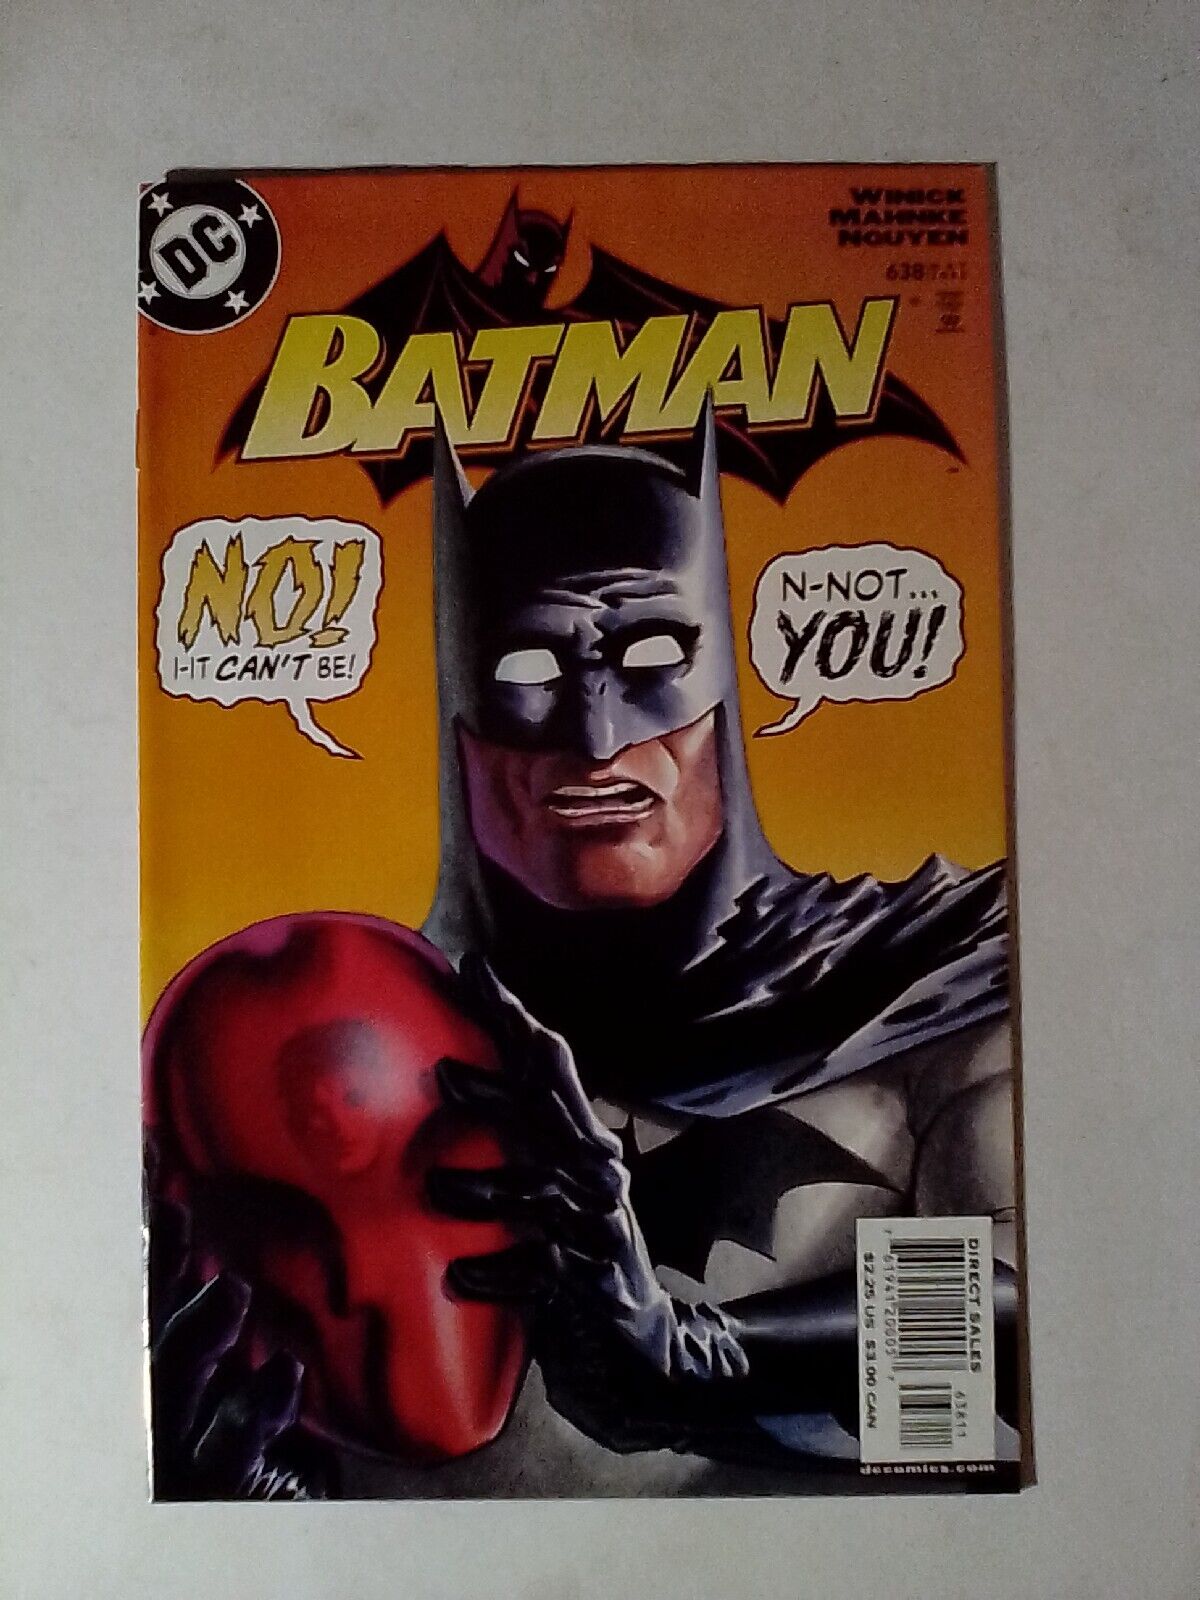 Batman #638 (DC Comics 2005) Red Hood Revealed to be Jason Todd